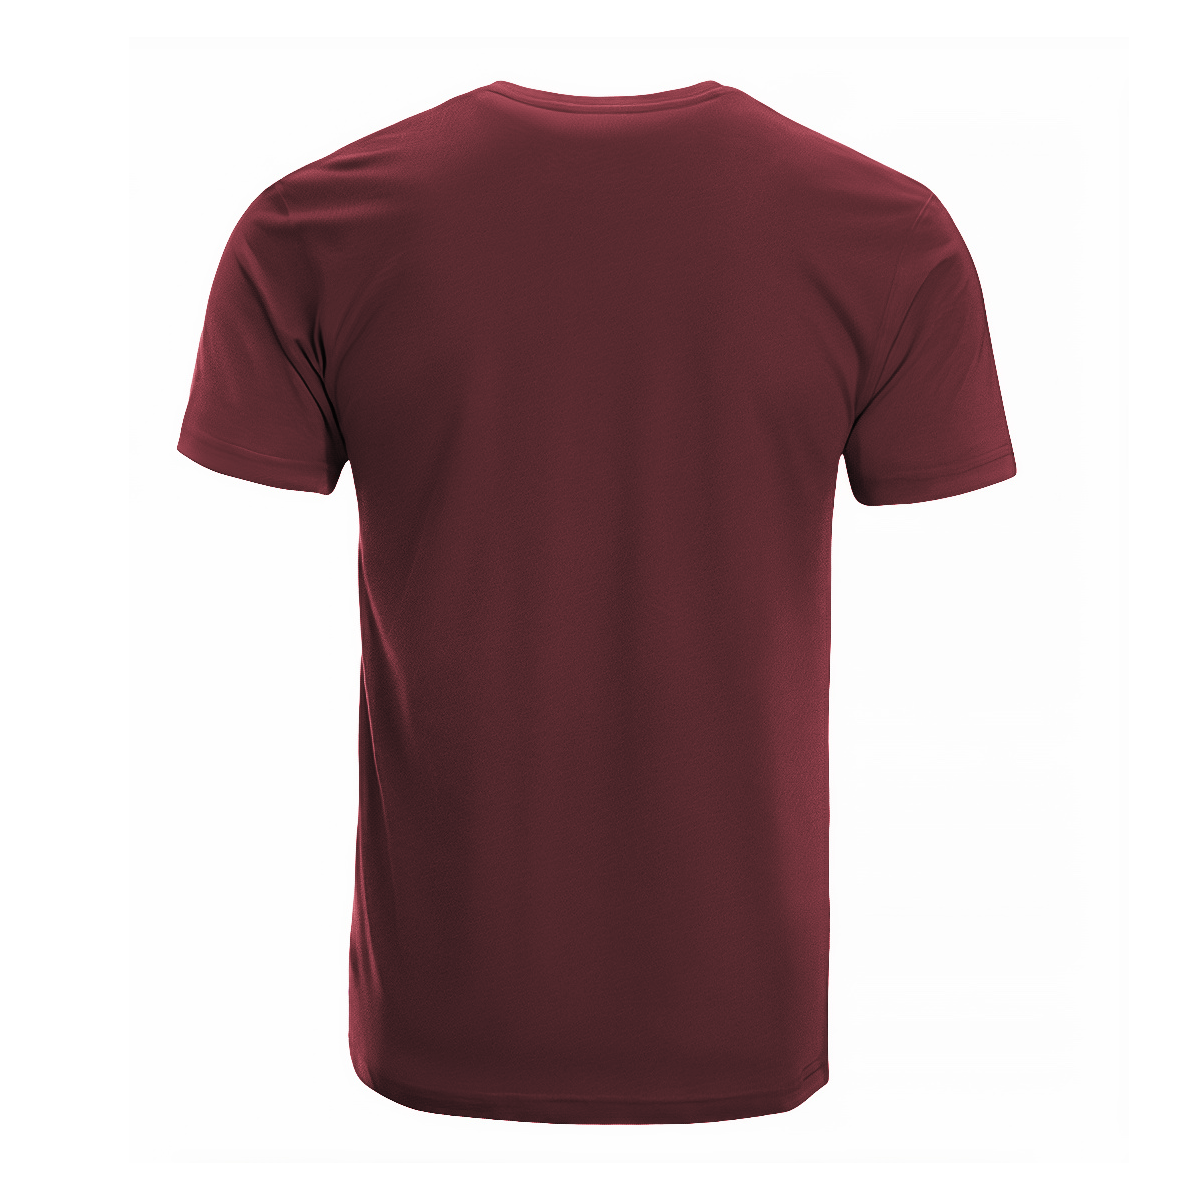 MacBrayne Tartan Crest T-shirt - I'm not yelling style